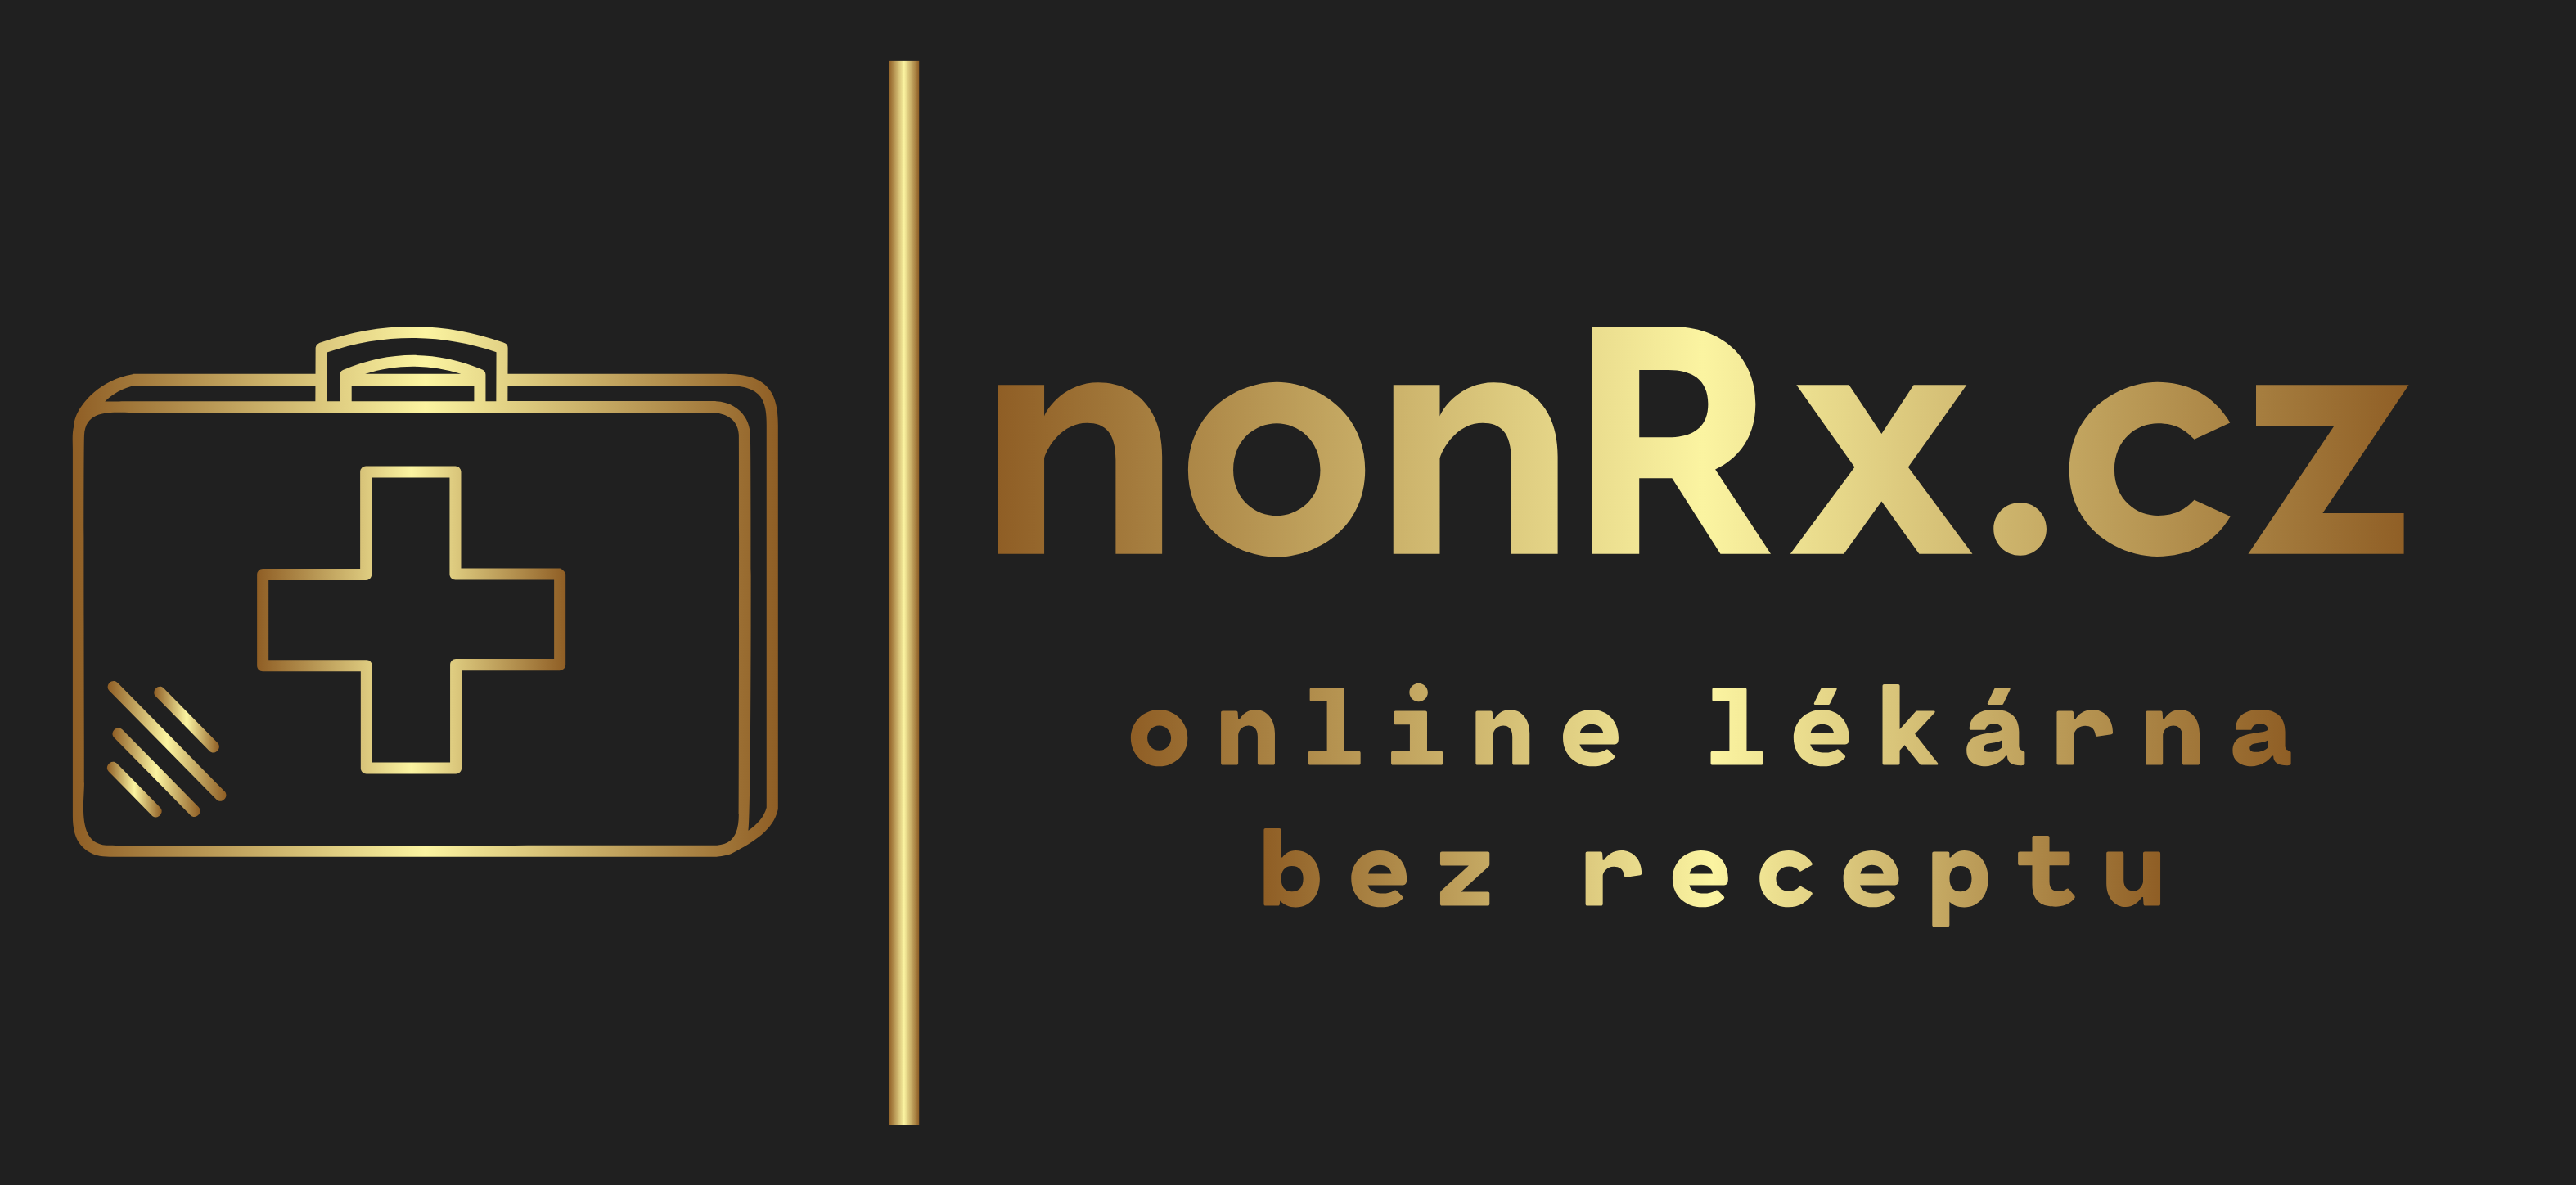 nonRx.cz